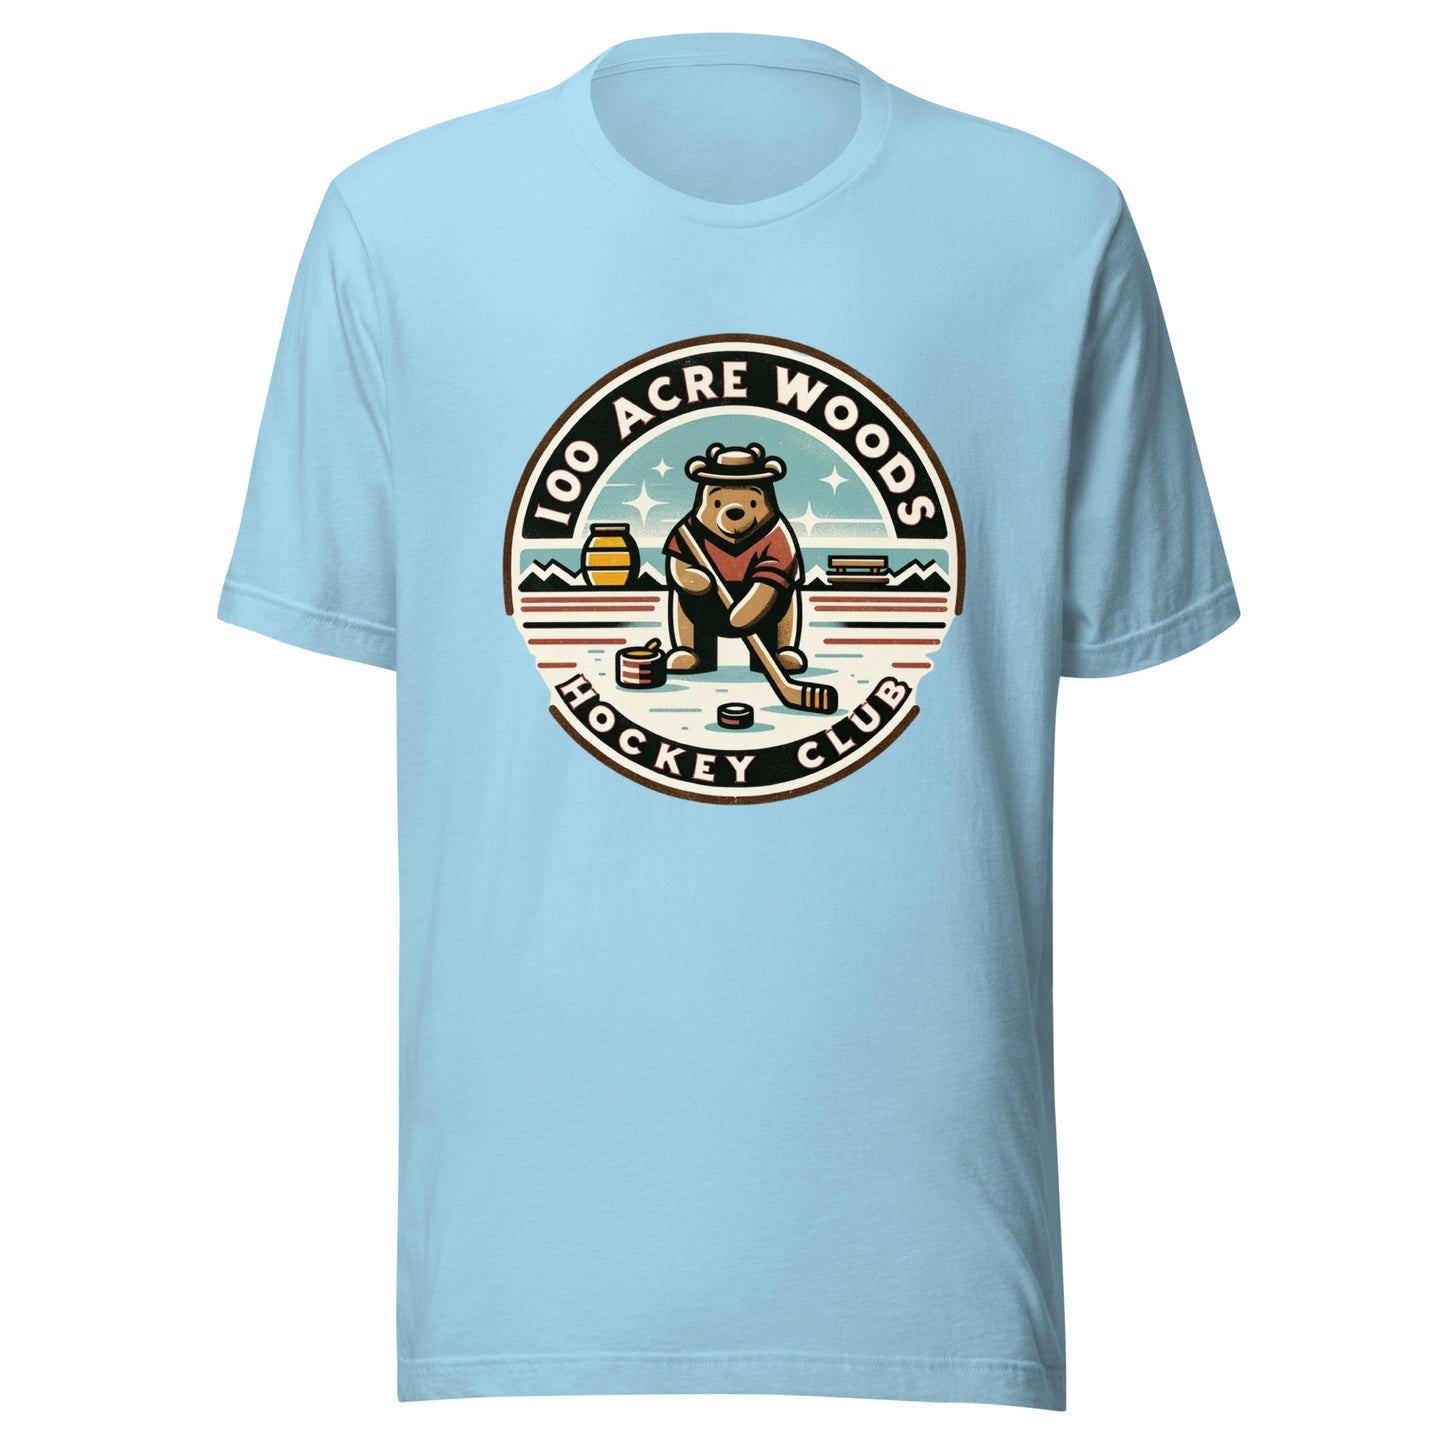 100 Acre Woods Hockey Club Unisex t-shirt